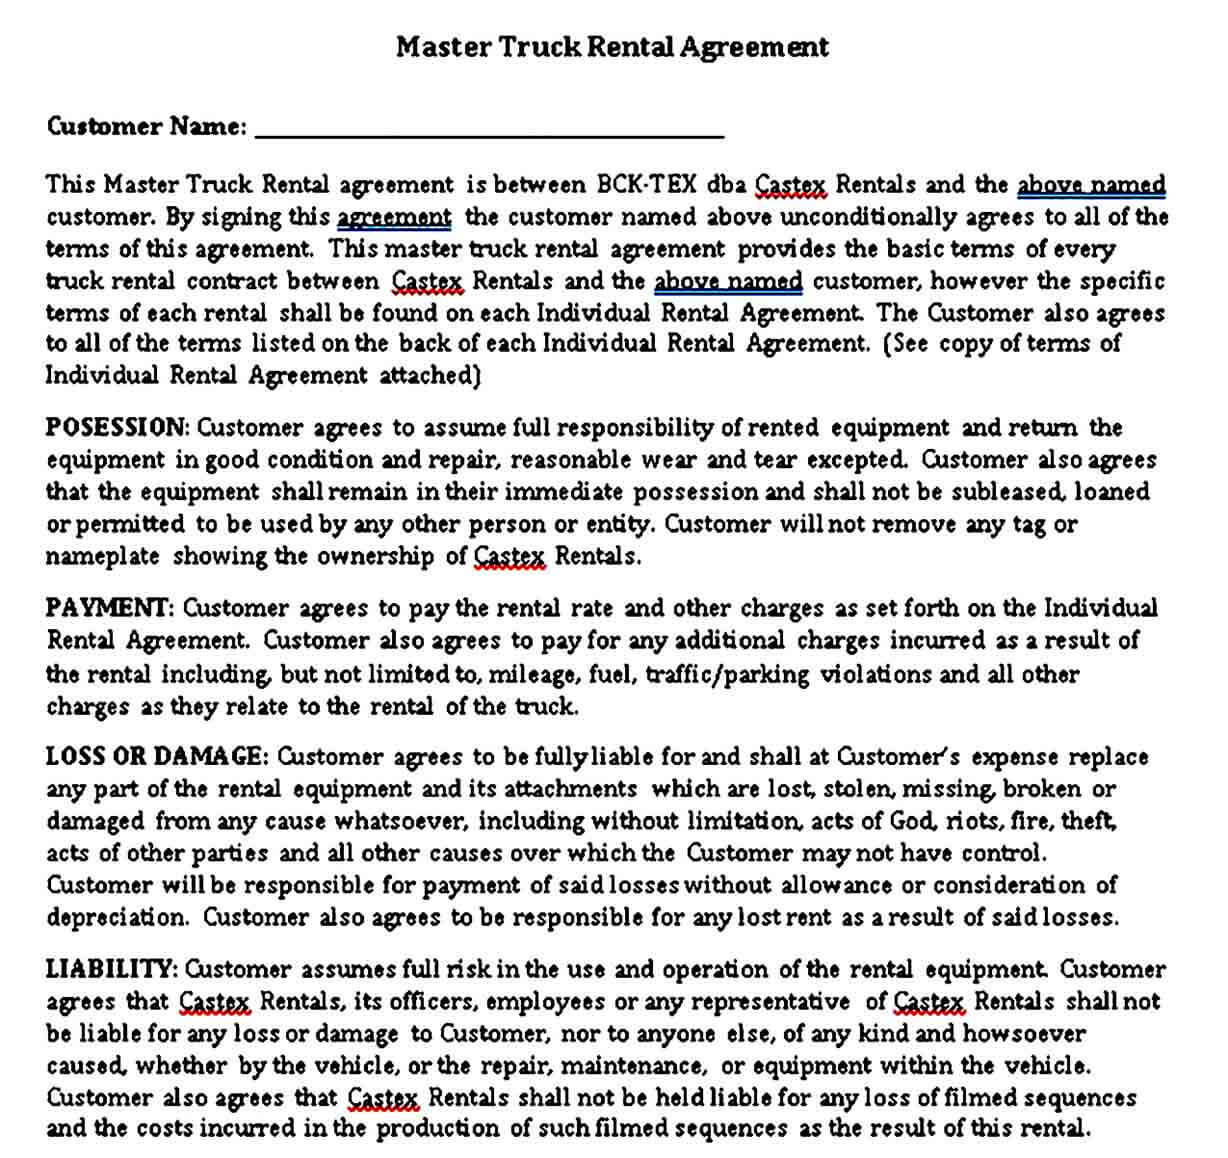 Master Truck Rental Agreement